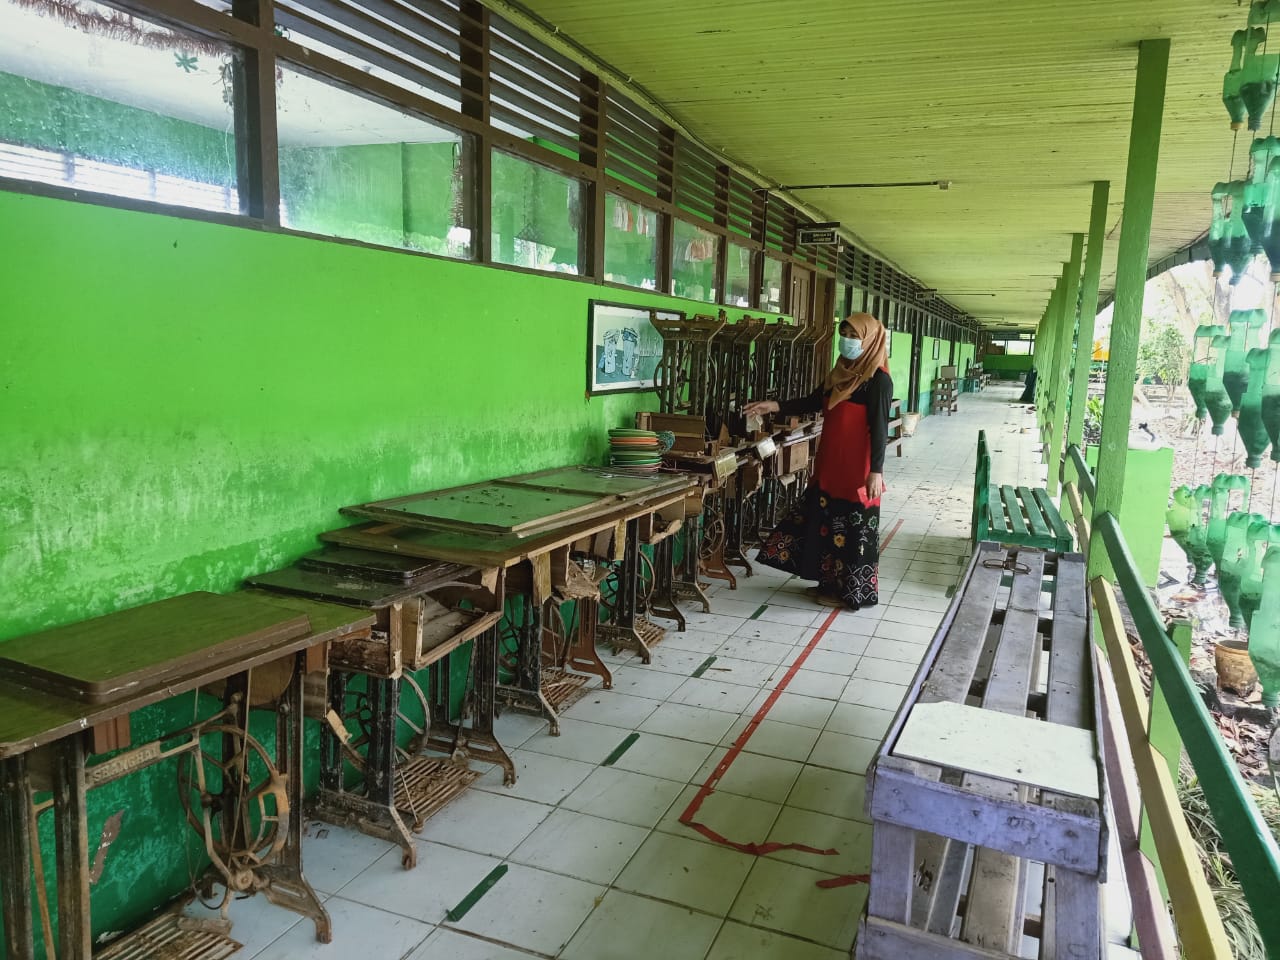 Sarana dan prasarana di SMP Negeri 1 Astambul rusak berat akibat bencana banjir